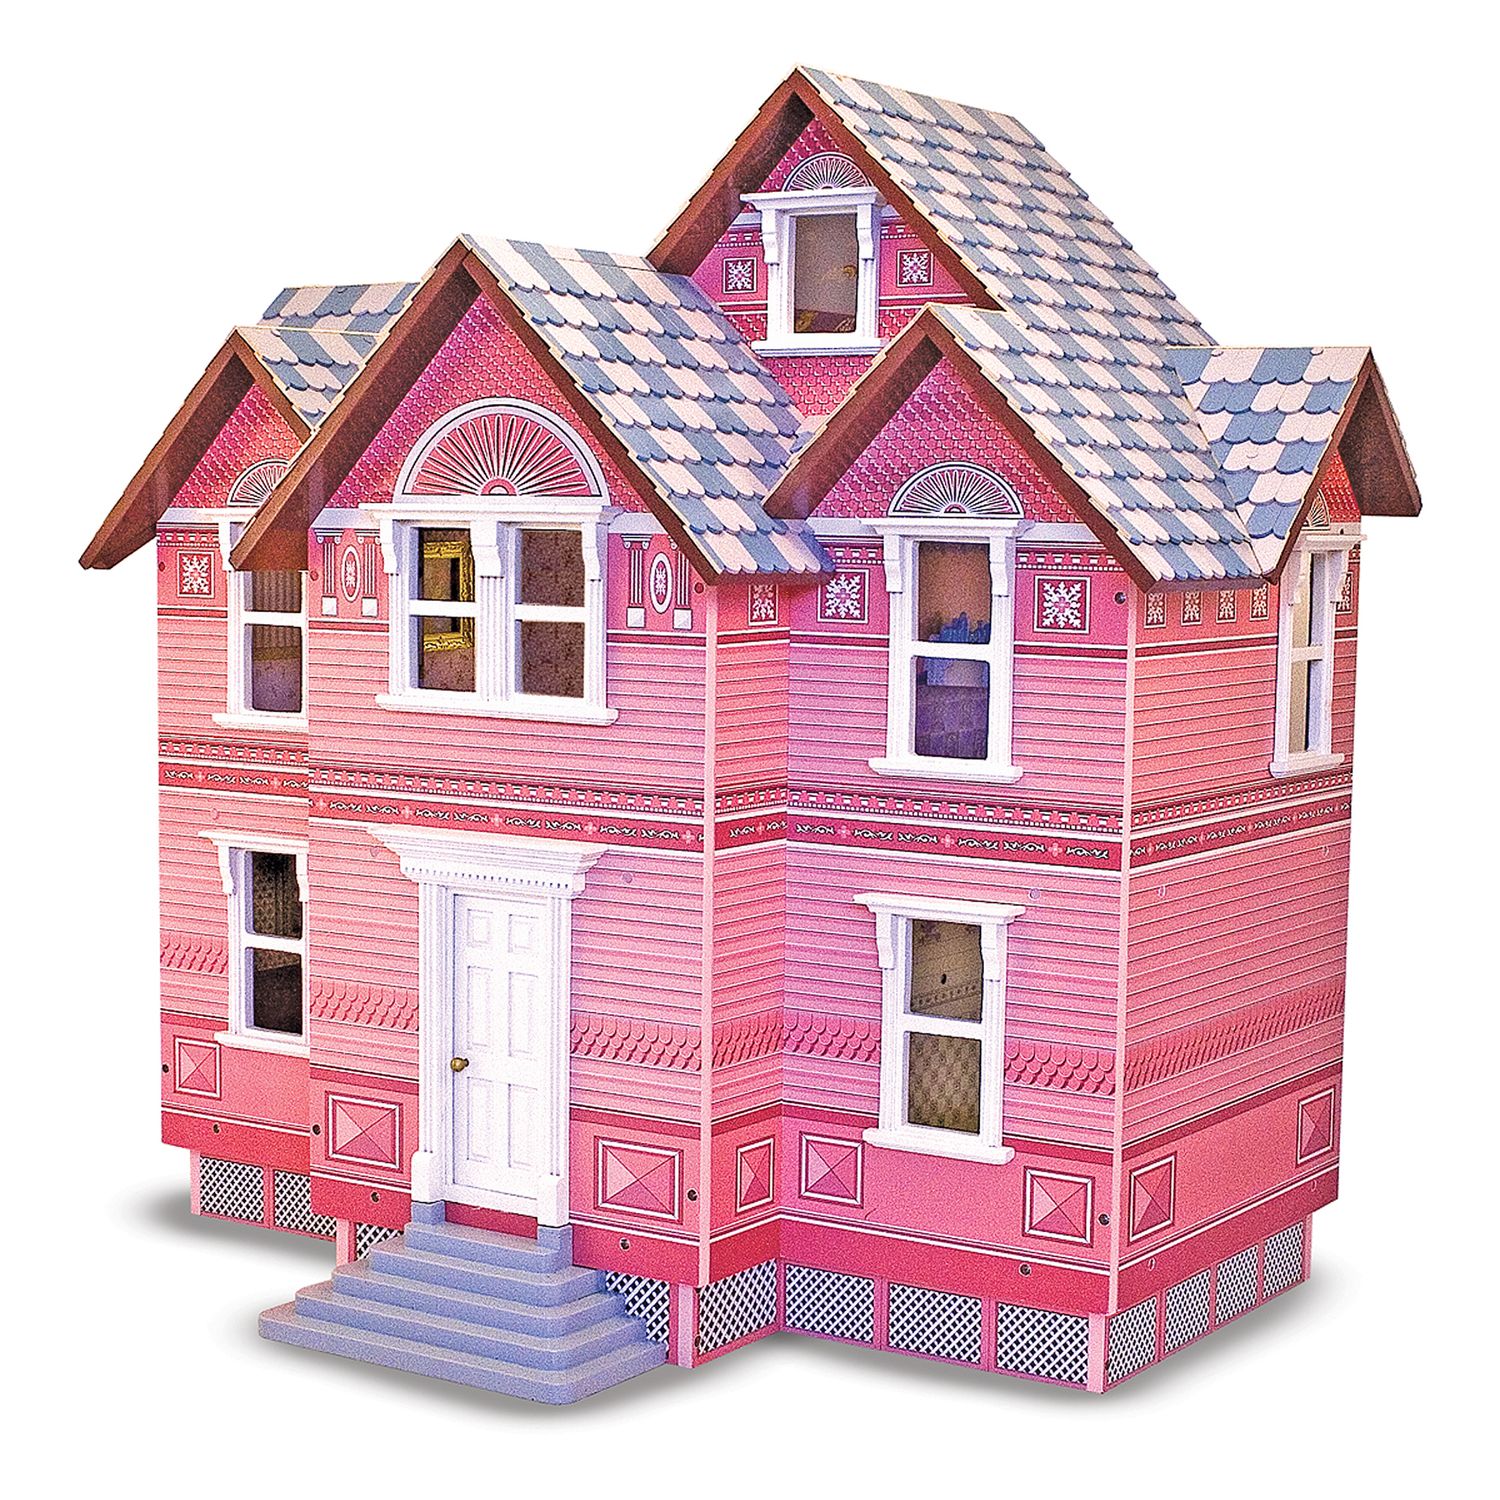 melissa & doug multi level wooden dollhouse